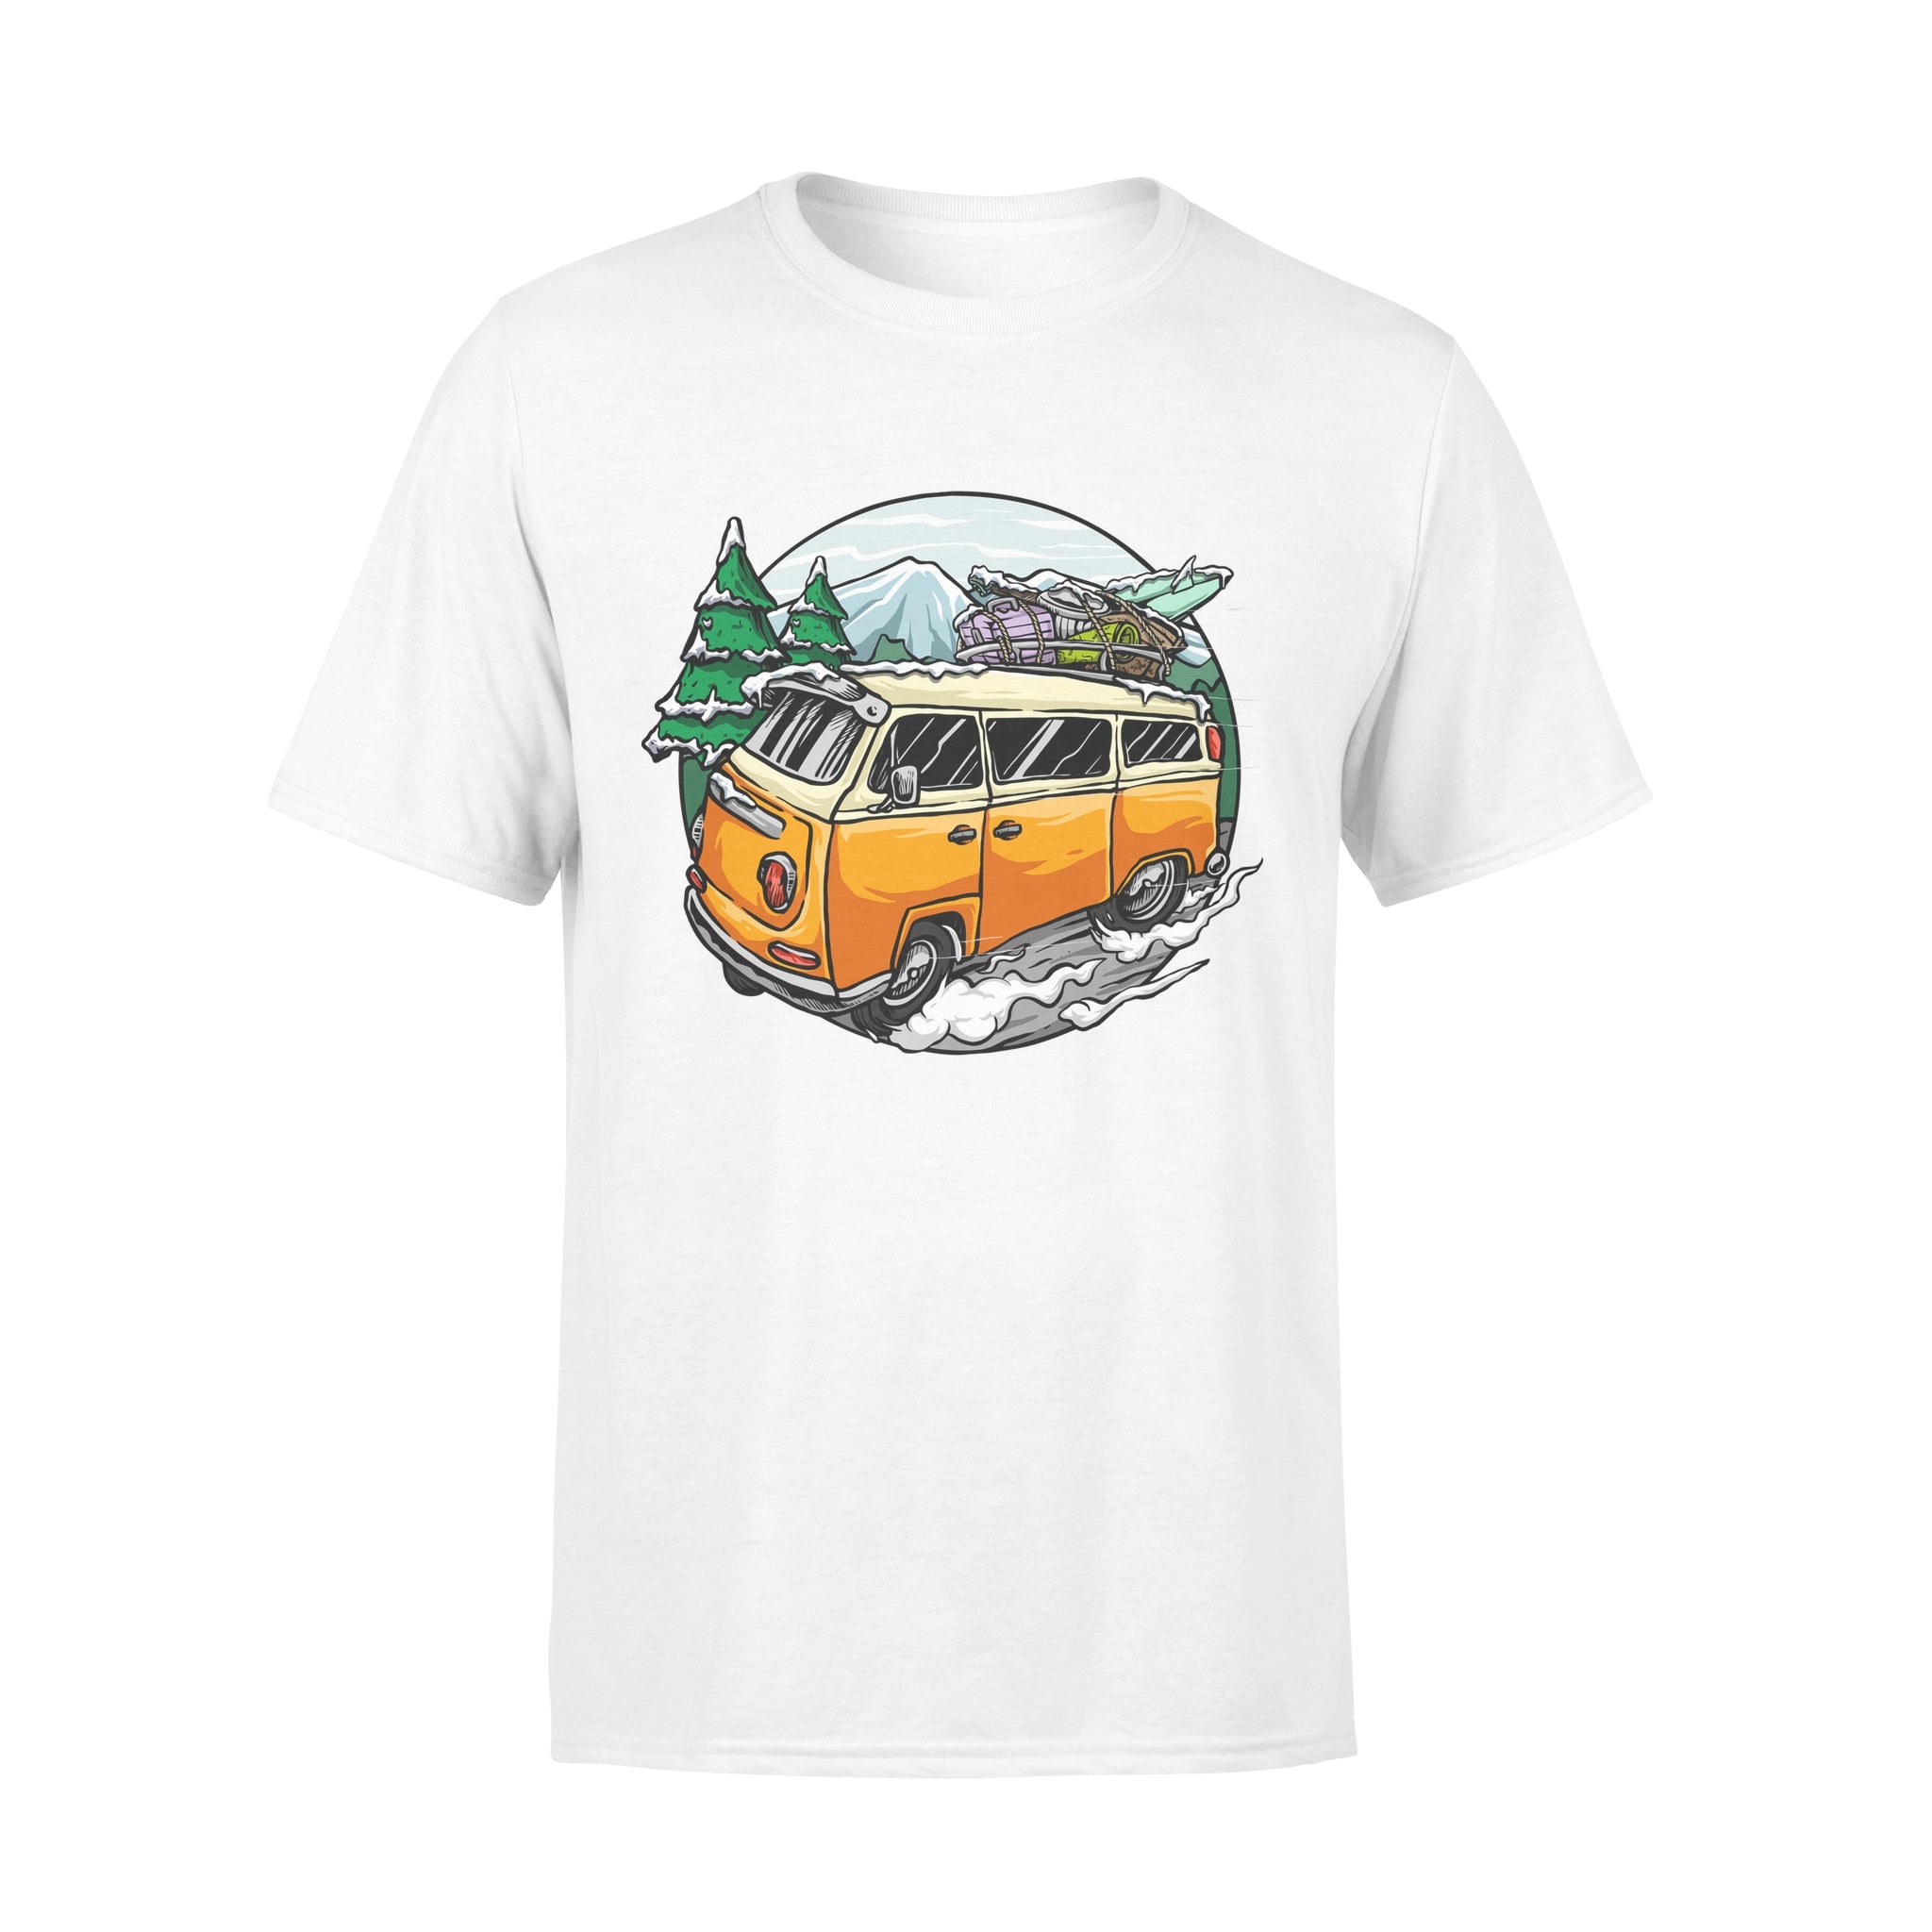 Winter Travel -  T-shirt